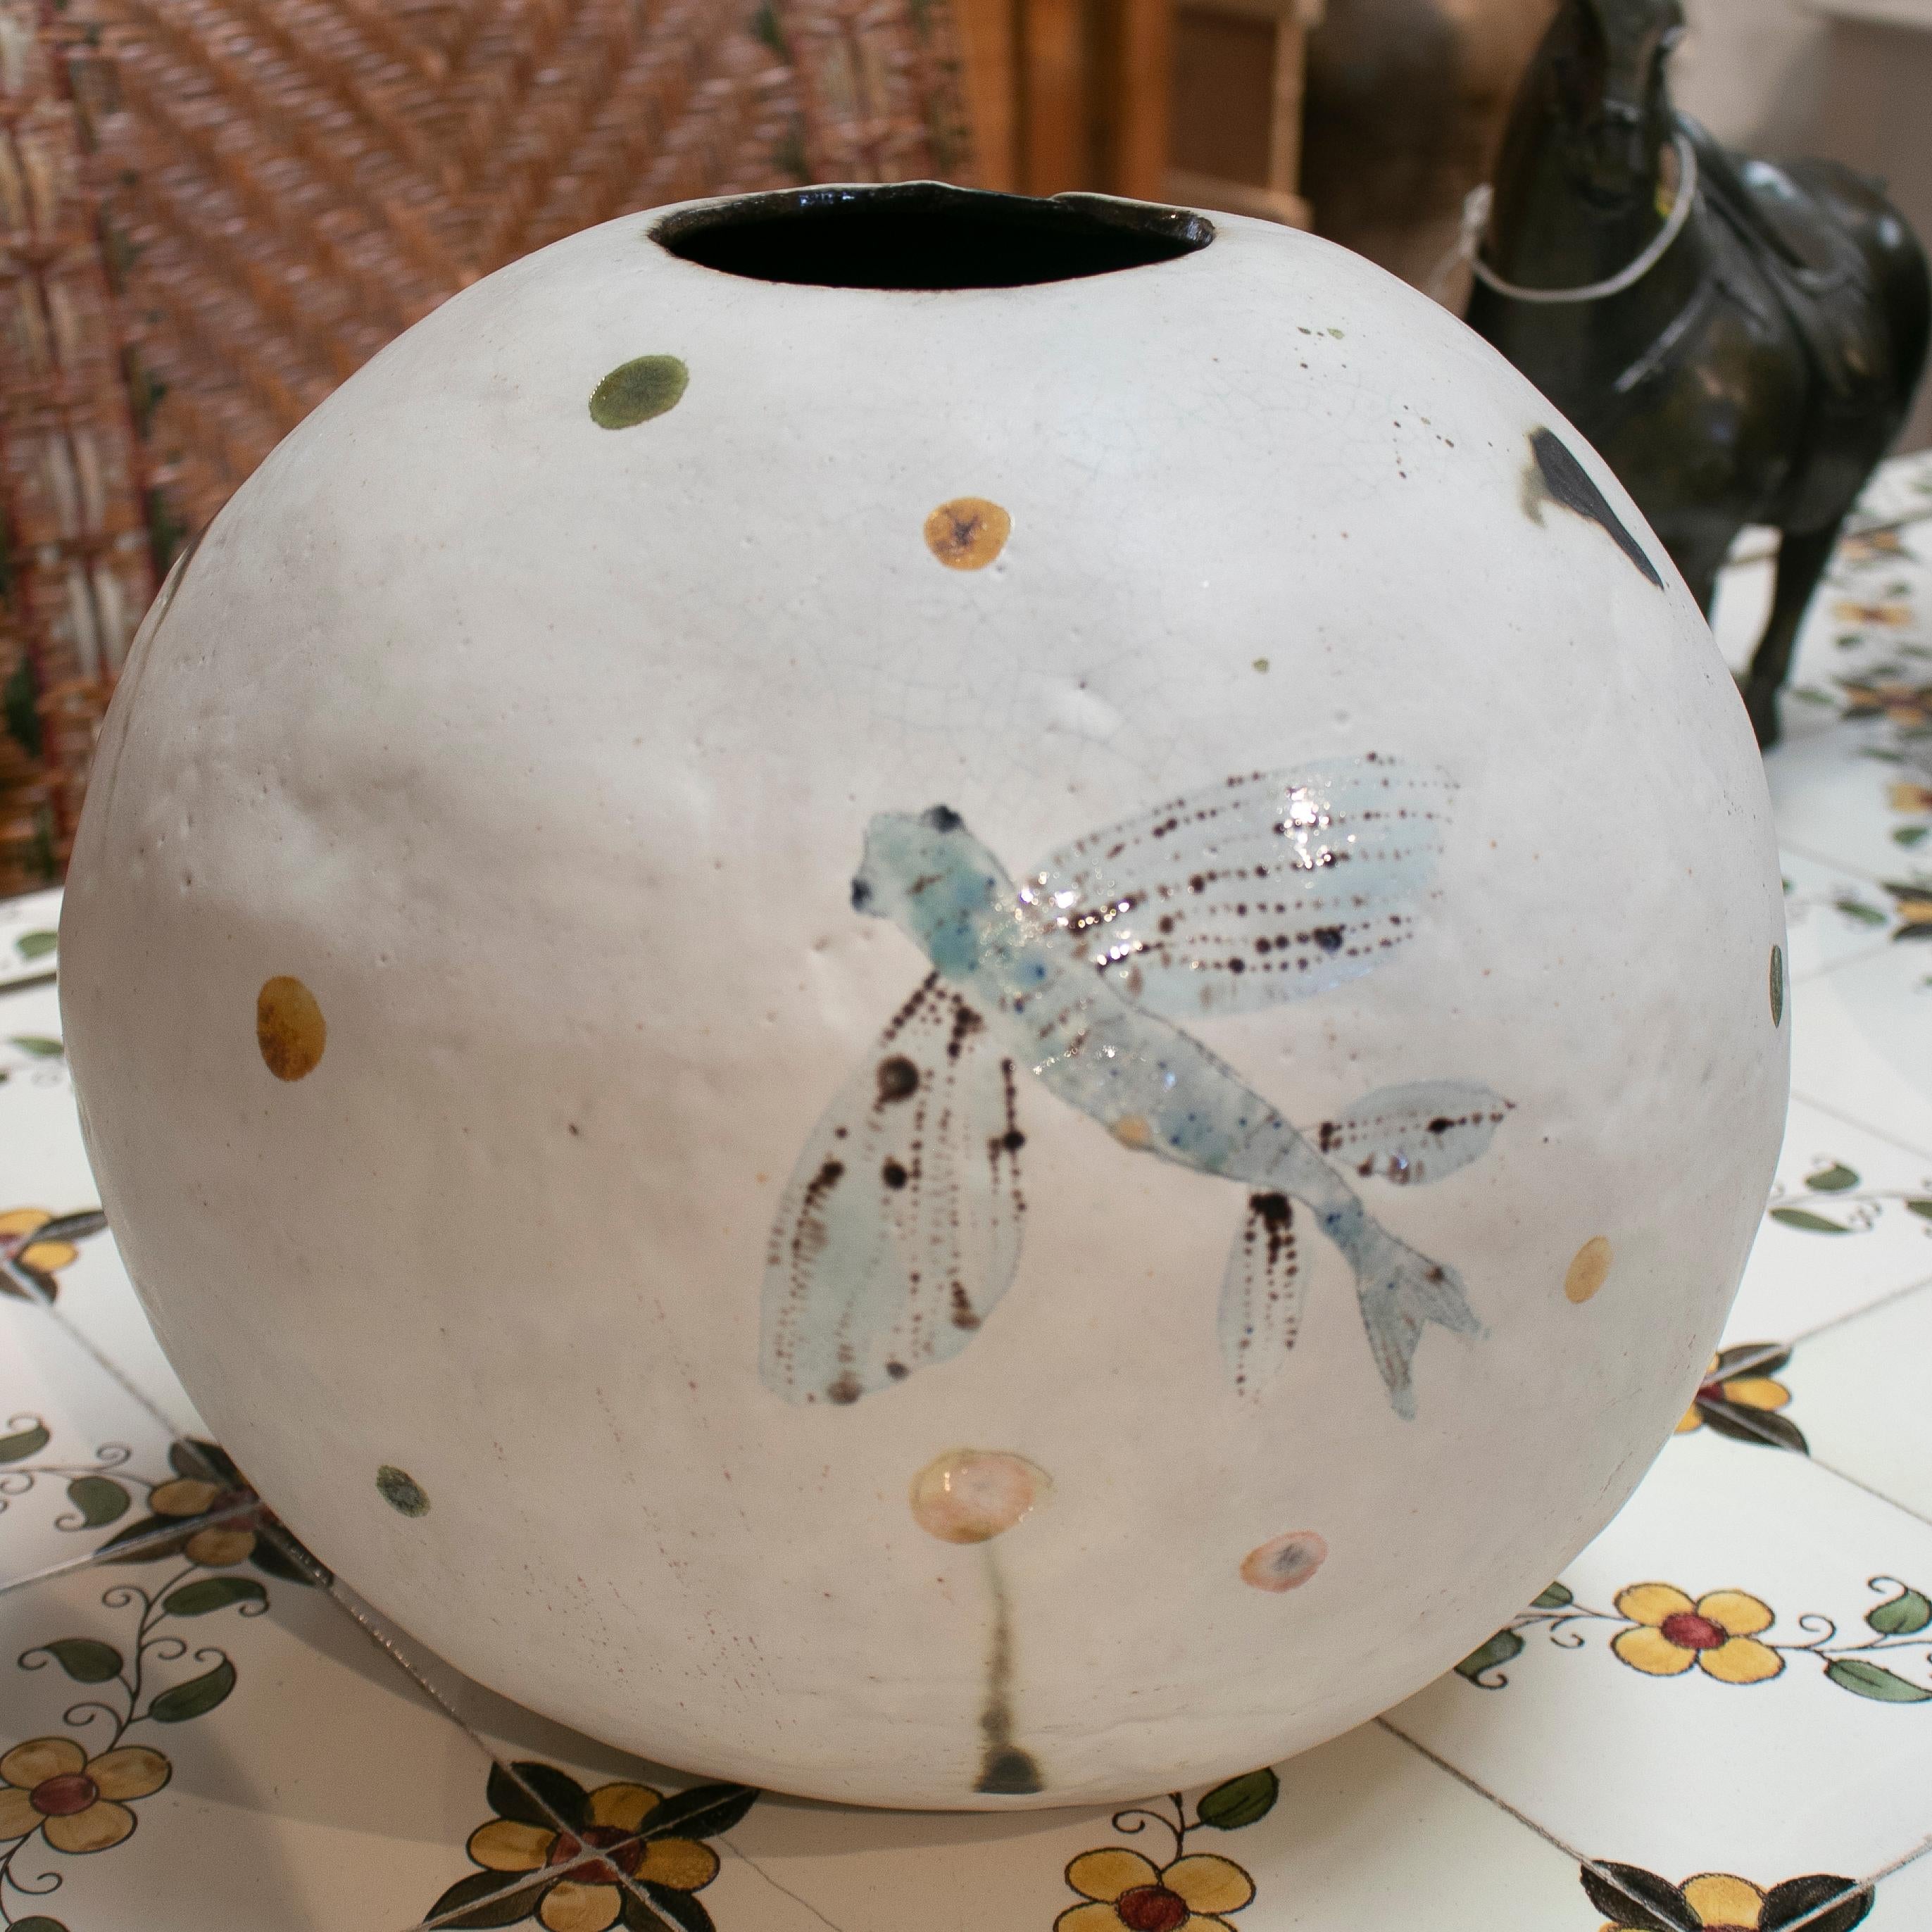 Spanish Original Handmade Ceramic Vase Decorated with Hand Painted Fish and Plants